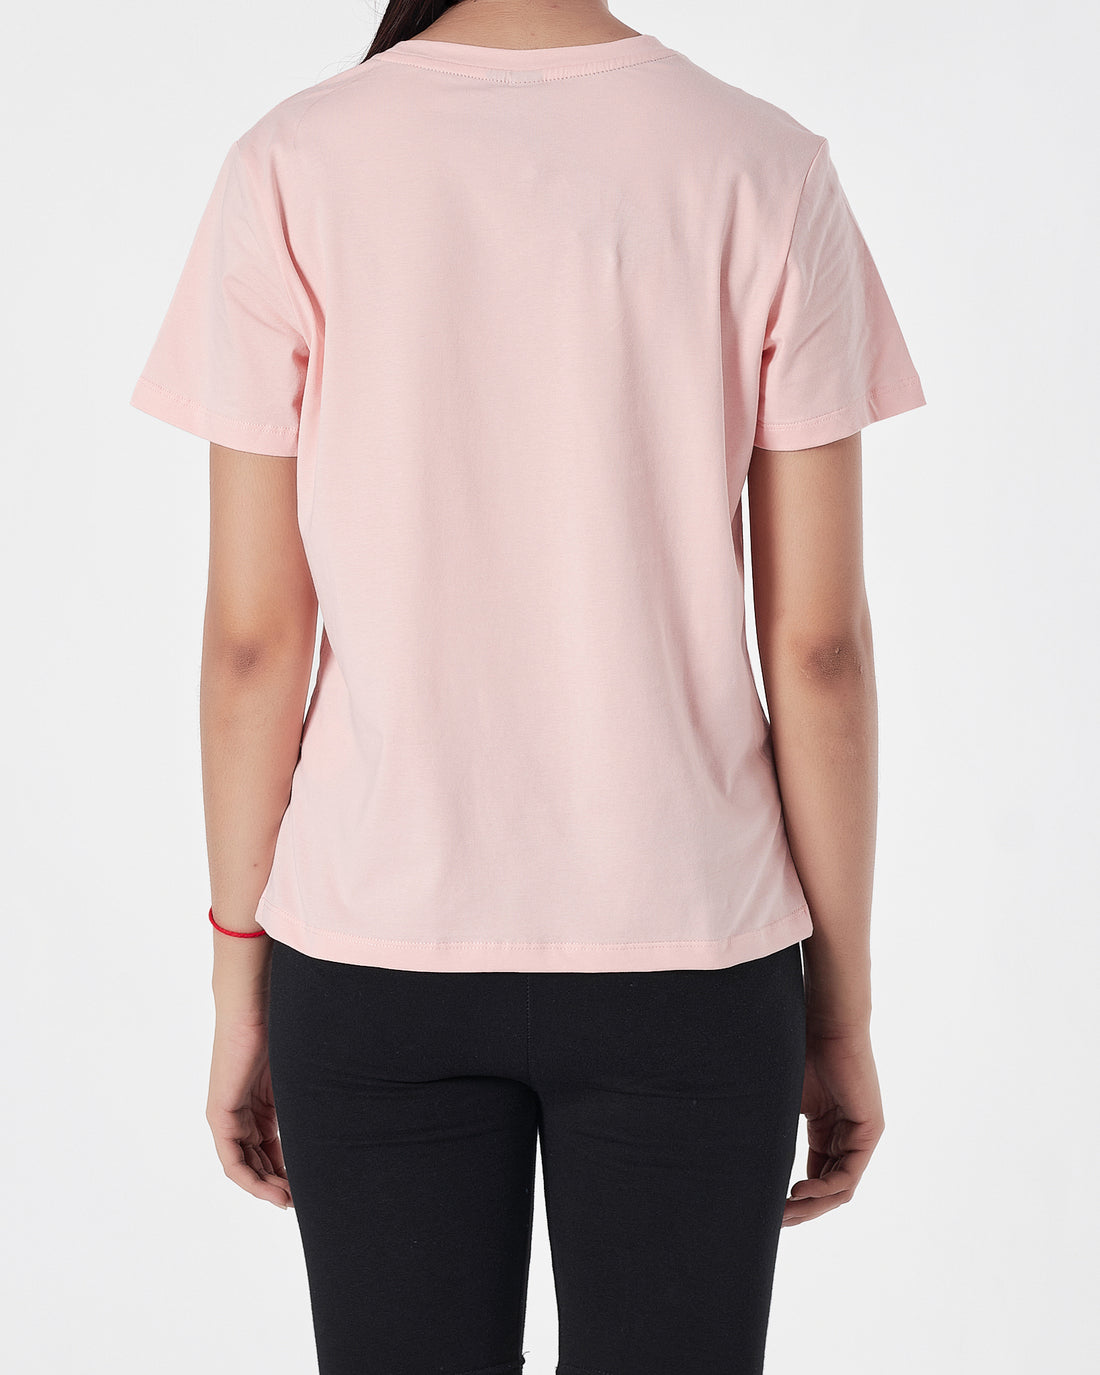 ADI Logo Embroidered Lady Pink T-Shirt 13.90